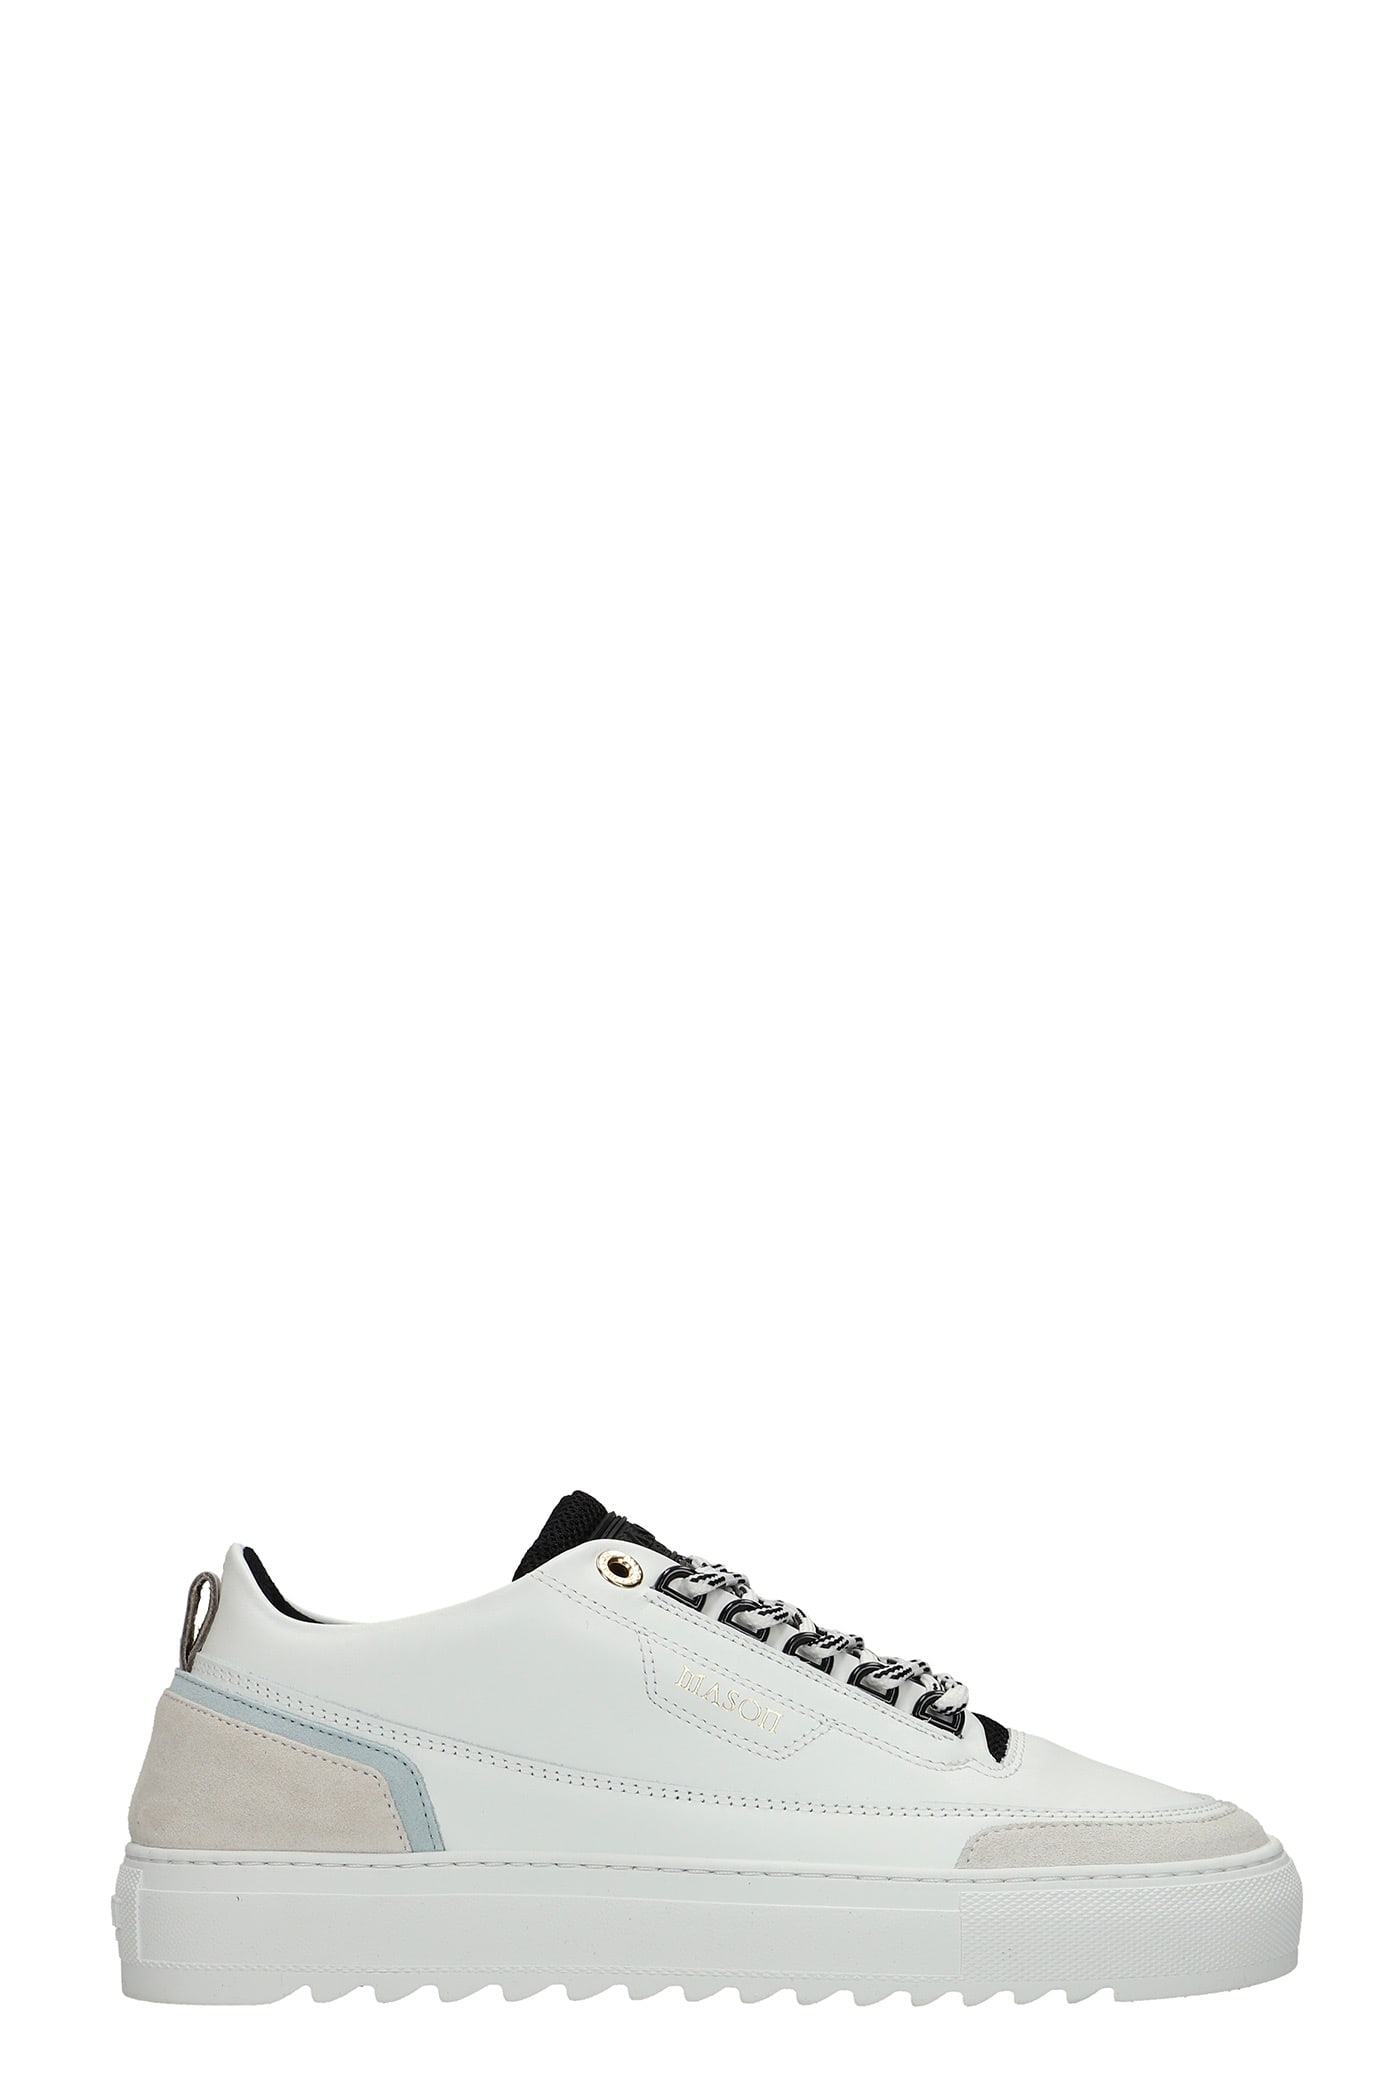 Mason Garments Firenze Sneakers In White Leather